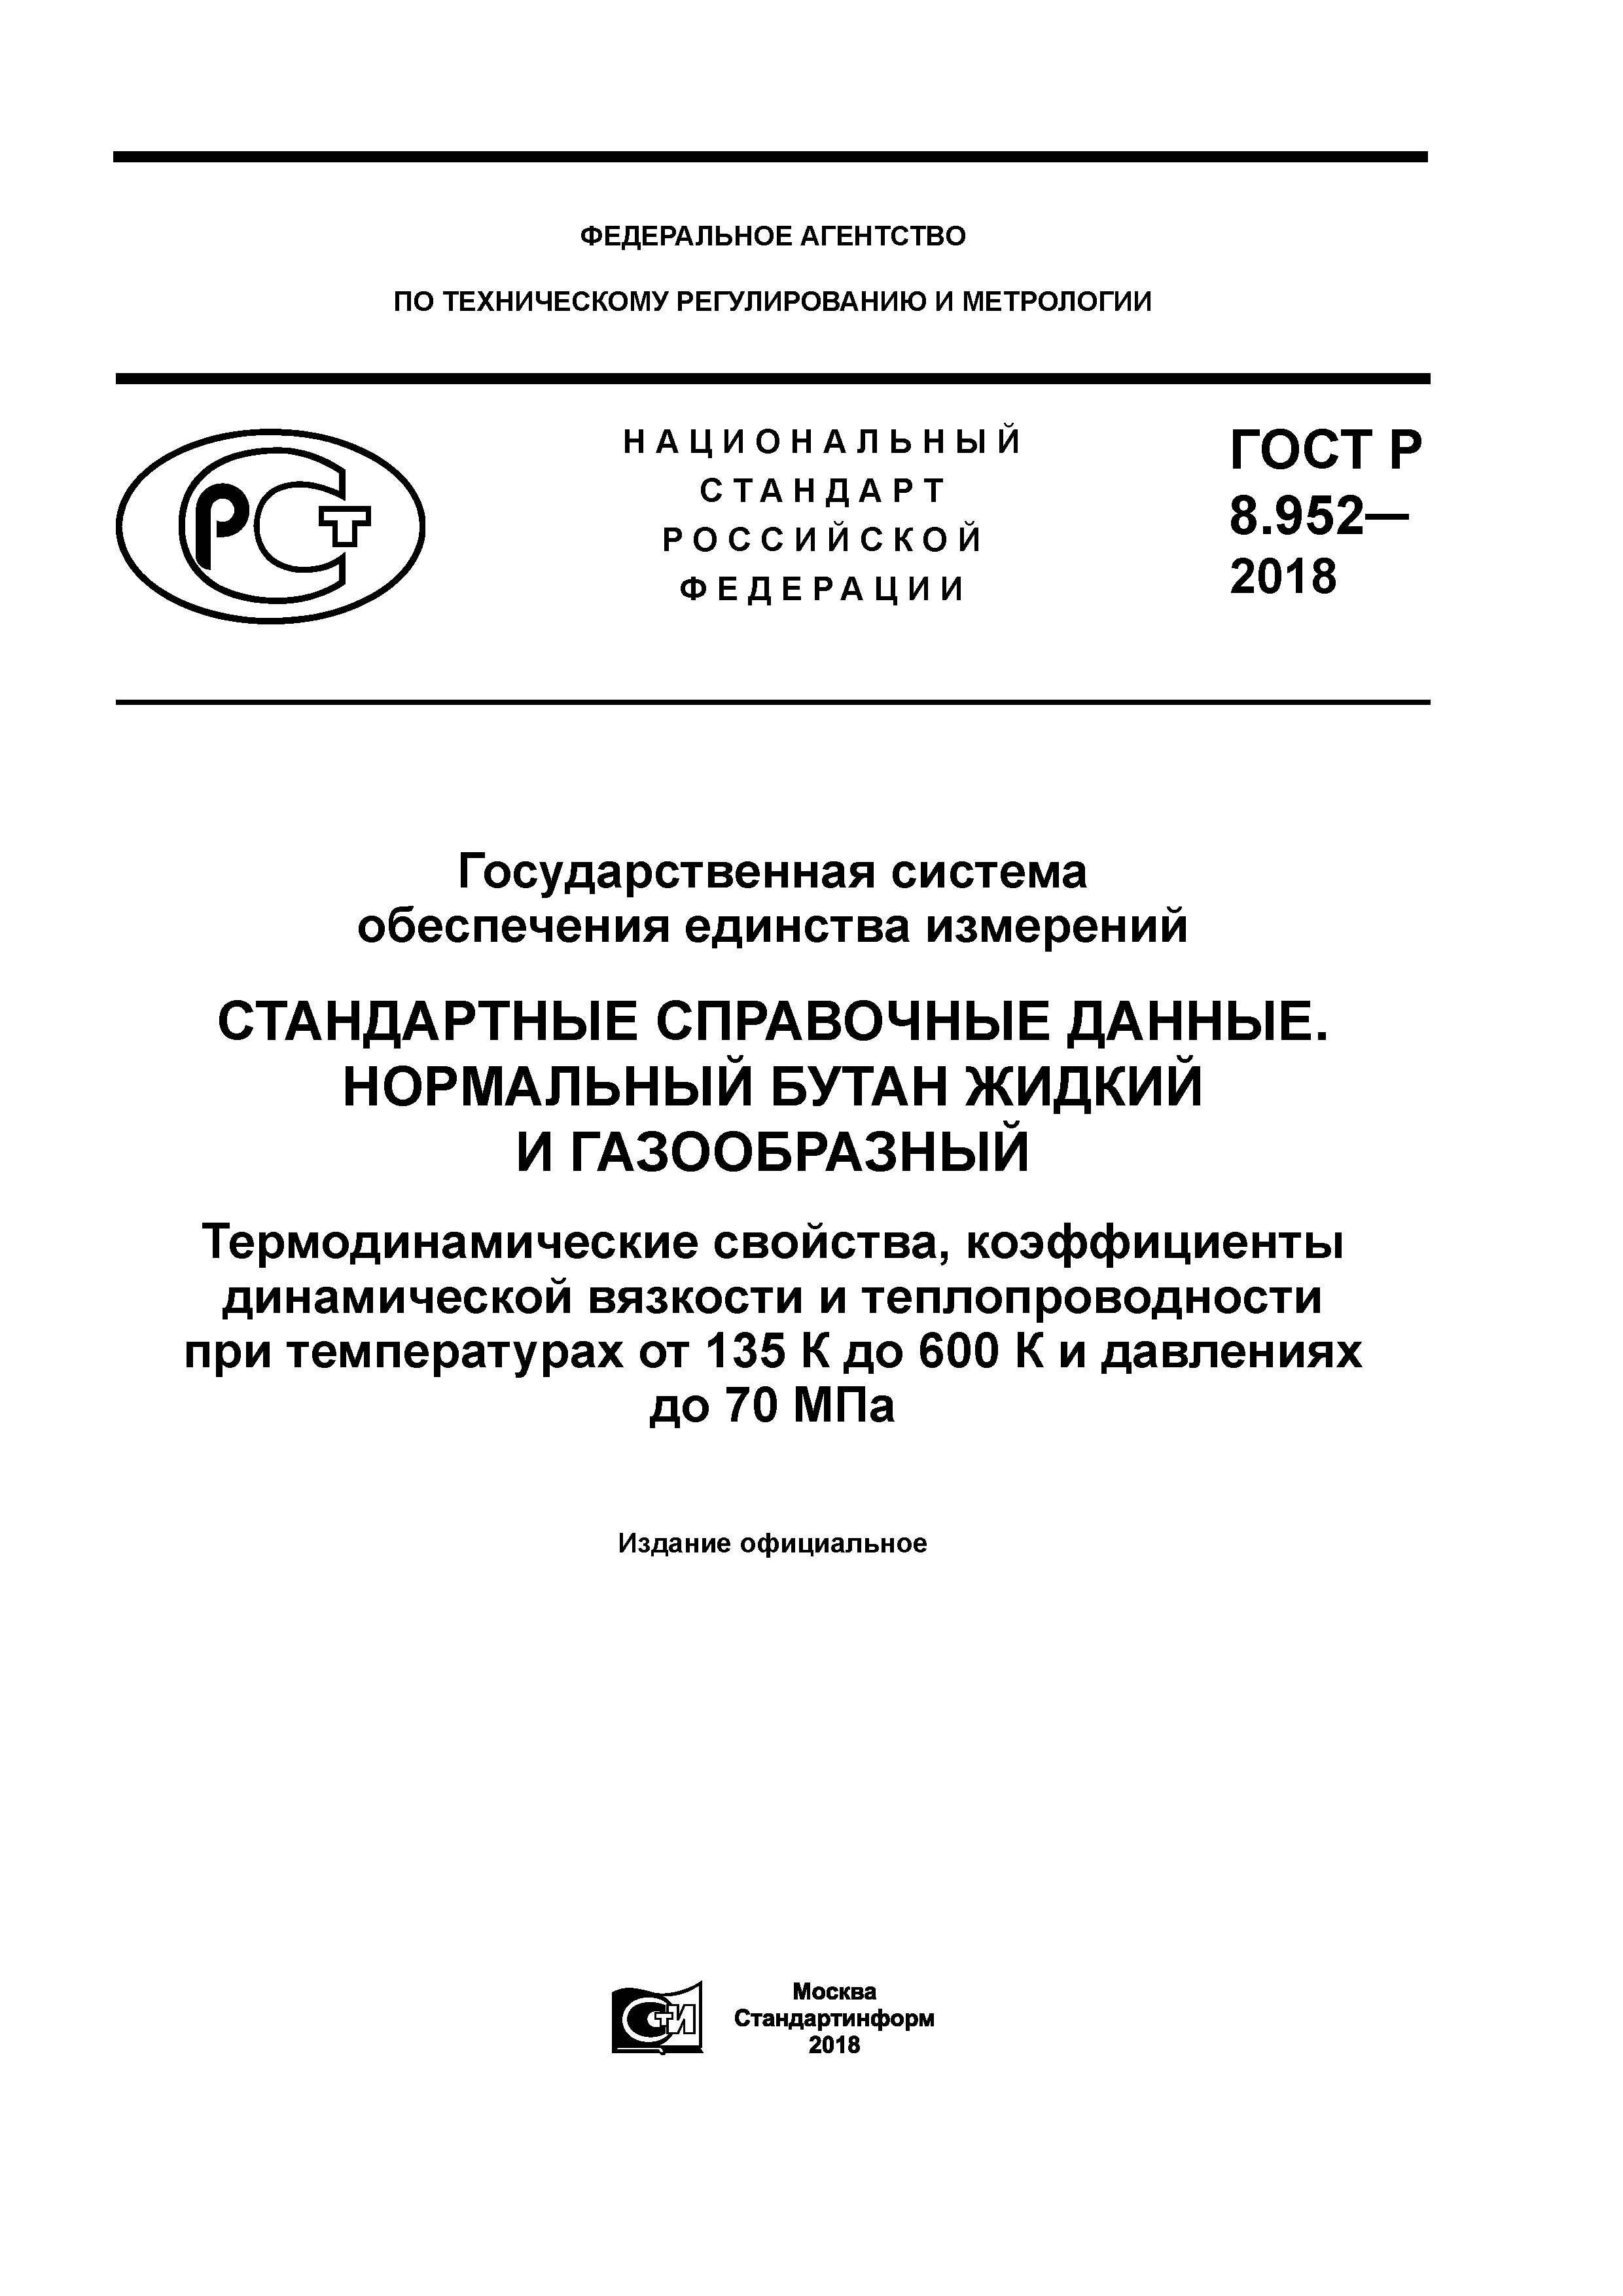 ГОСТ Р 8.952-2018